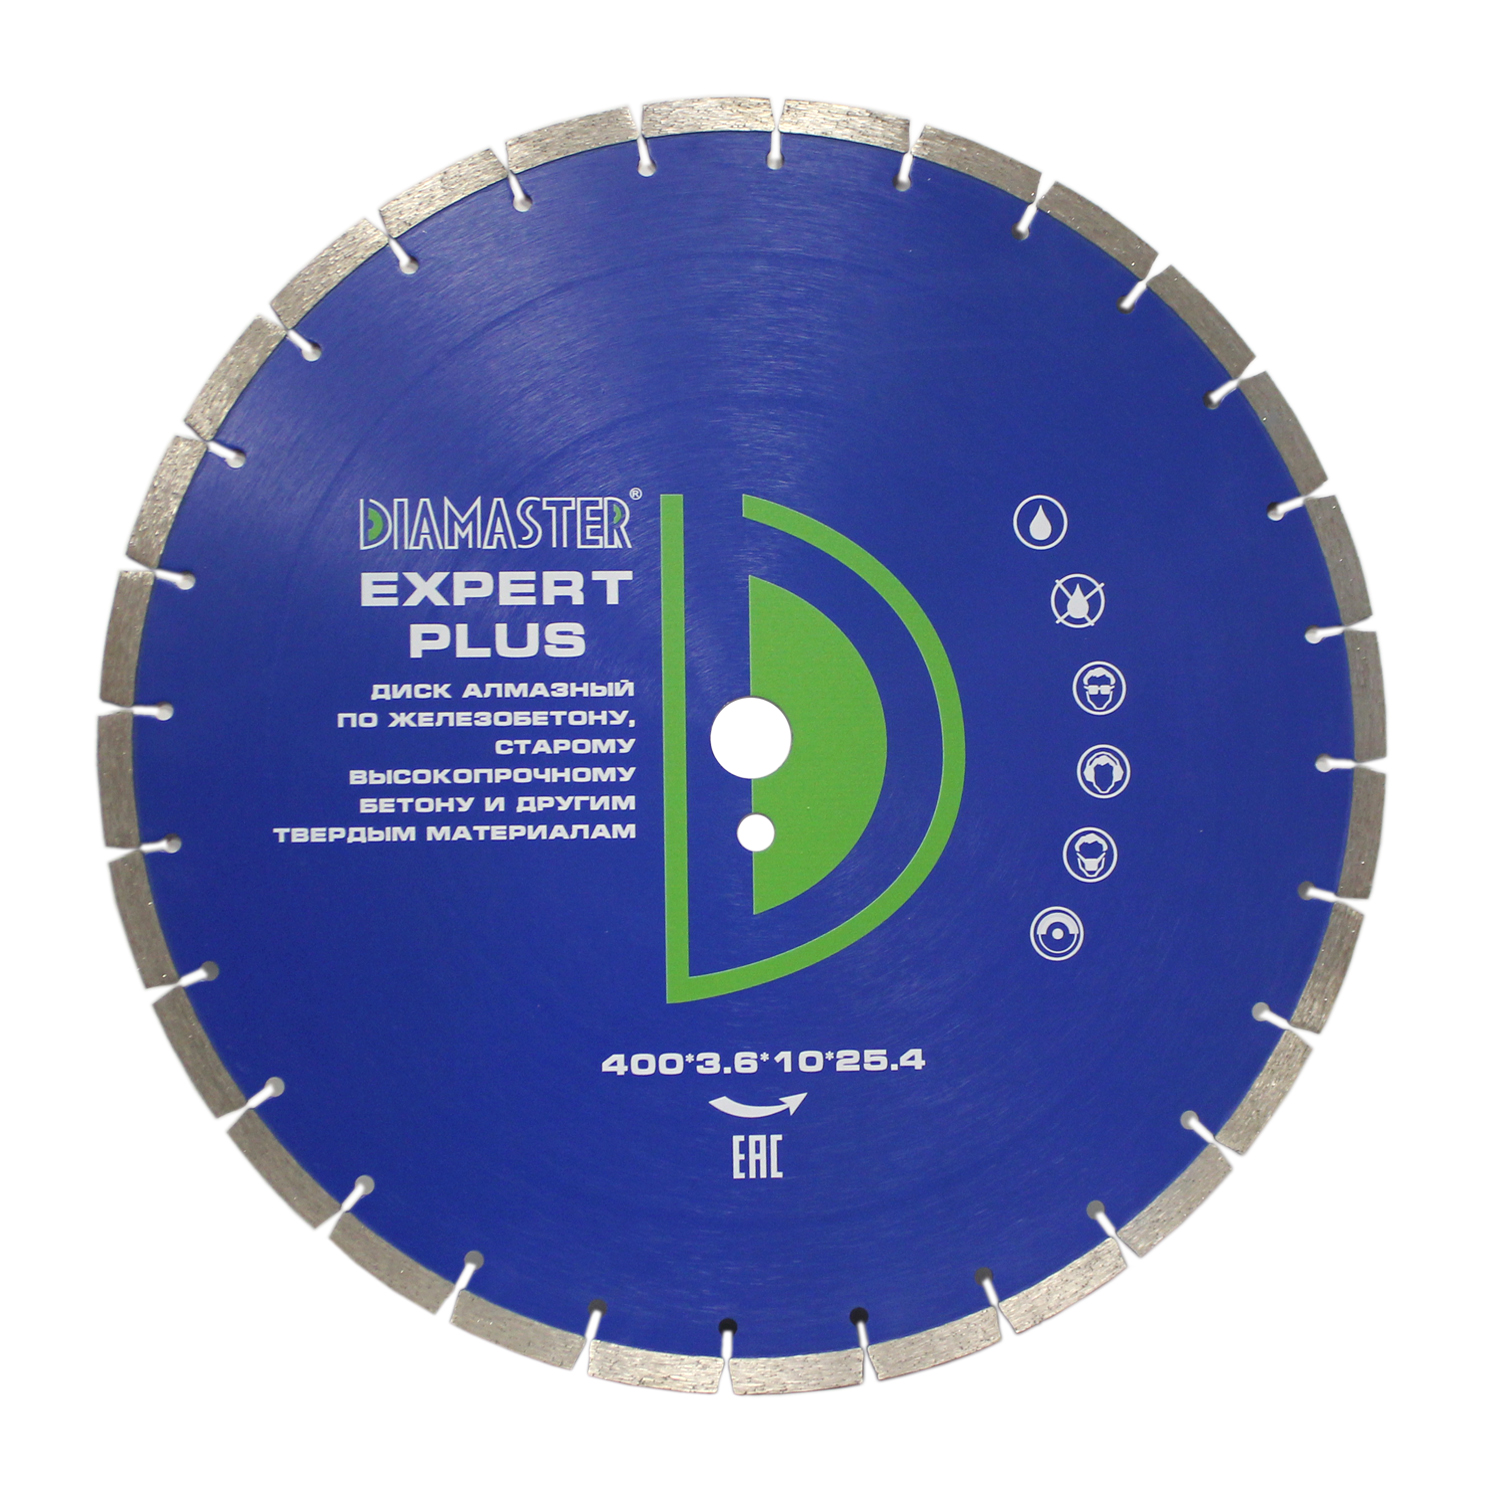 Диск сегментный Expert plus д.400*25,4 (*3,6*10)мм | 28z/железобетон/wet DIAMASTER диск сегментный laser ultra д 350 2 2 25 4 20 0 40 3 2 10 мм 24z железобетон wet dry diamaster